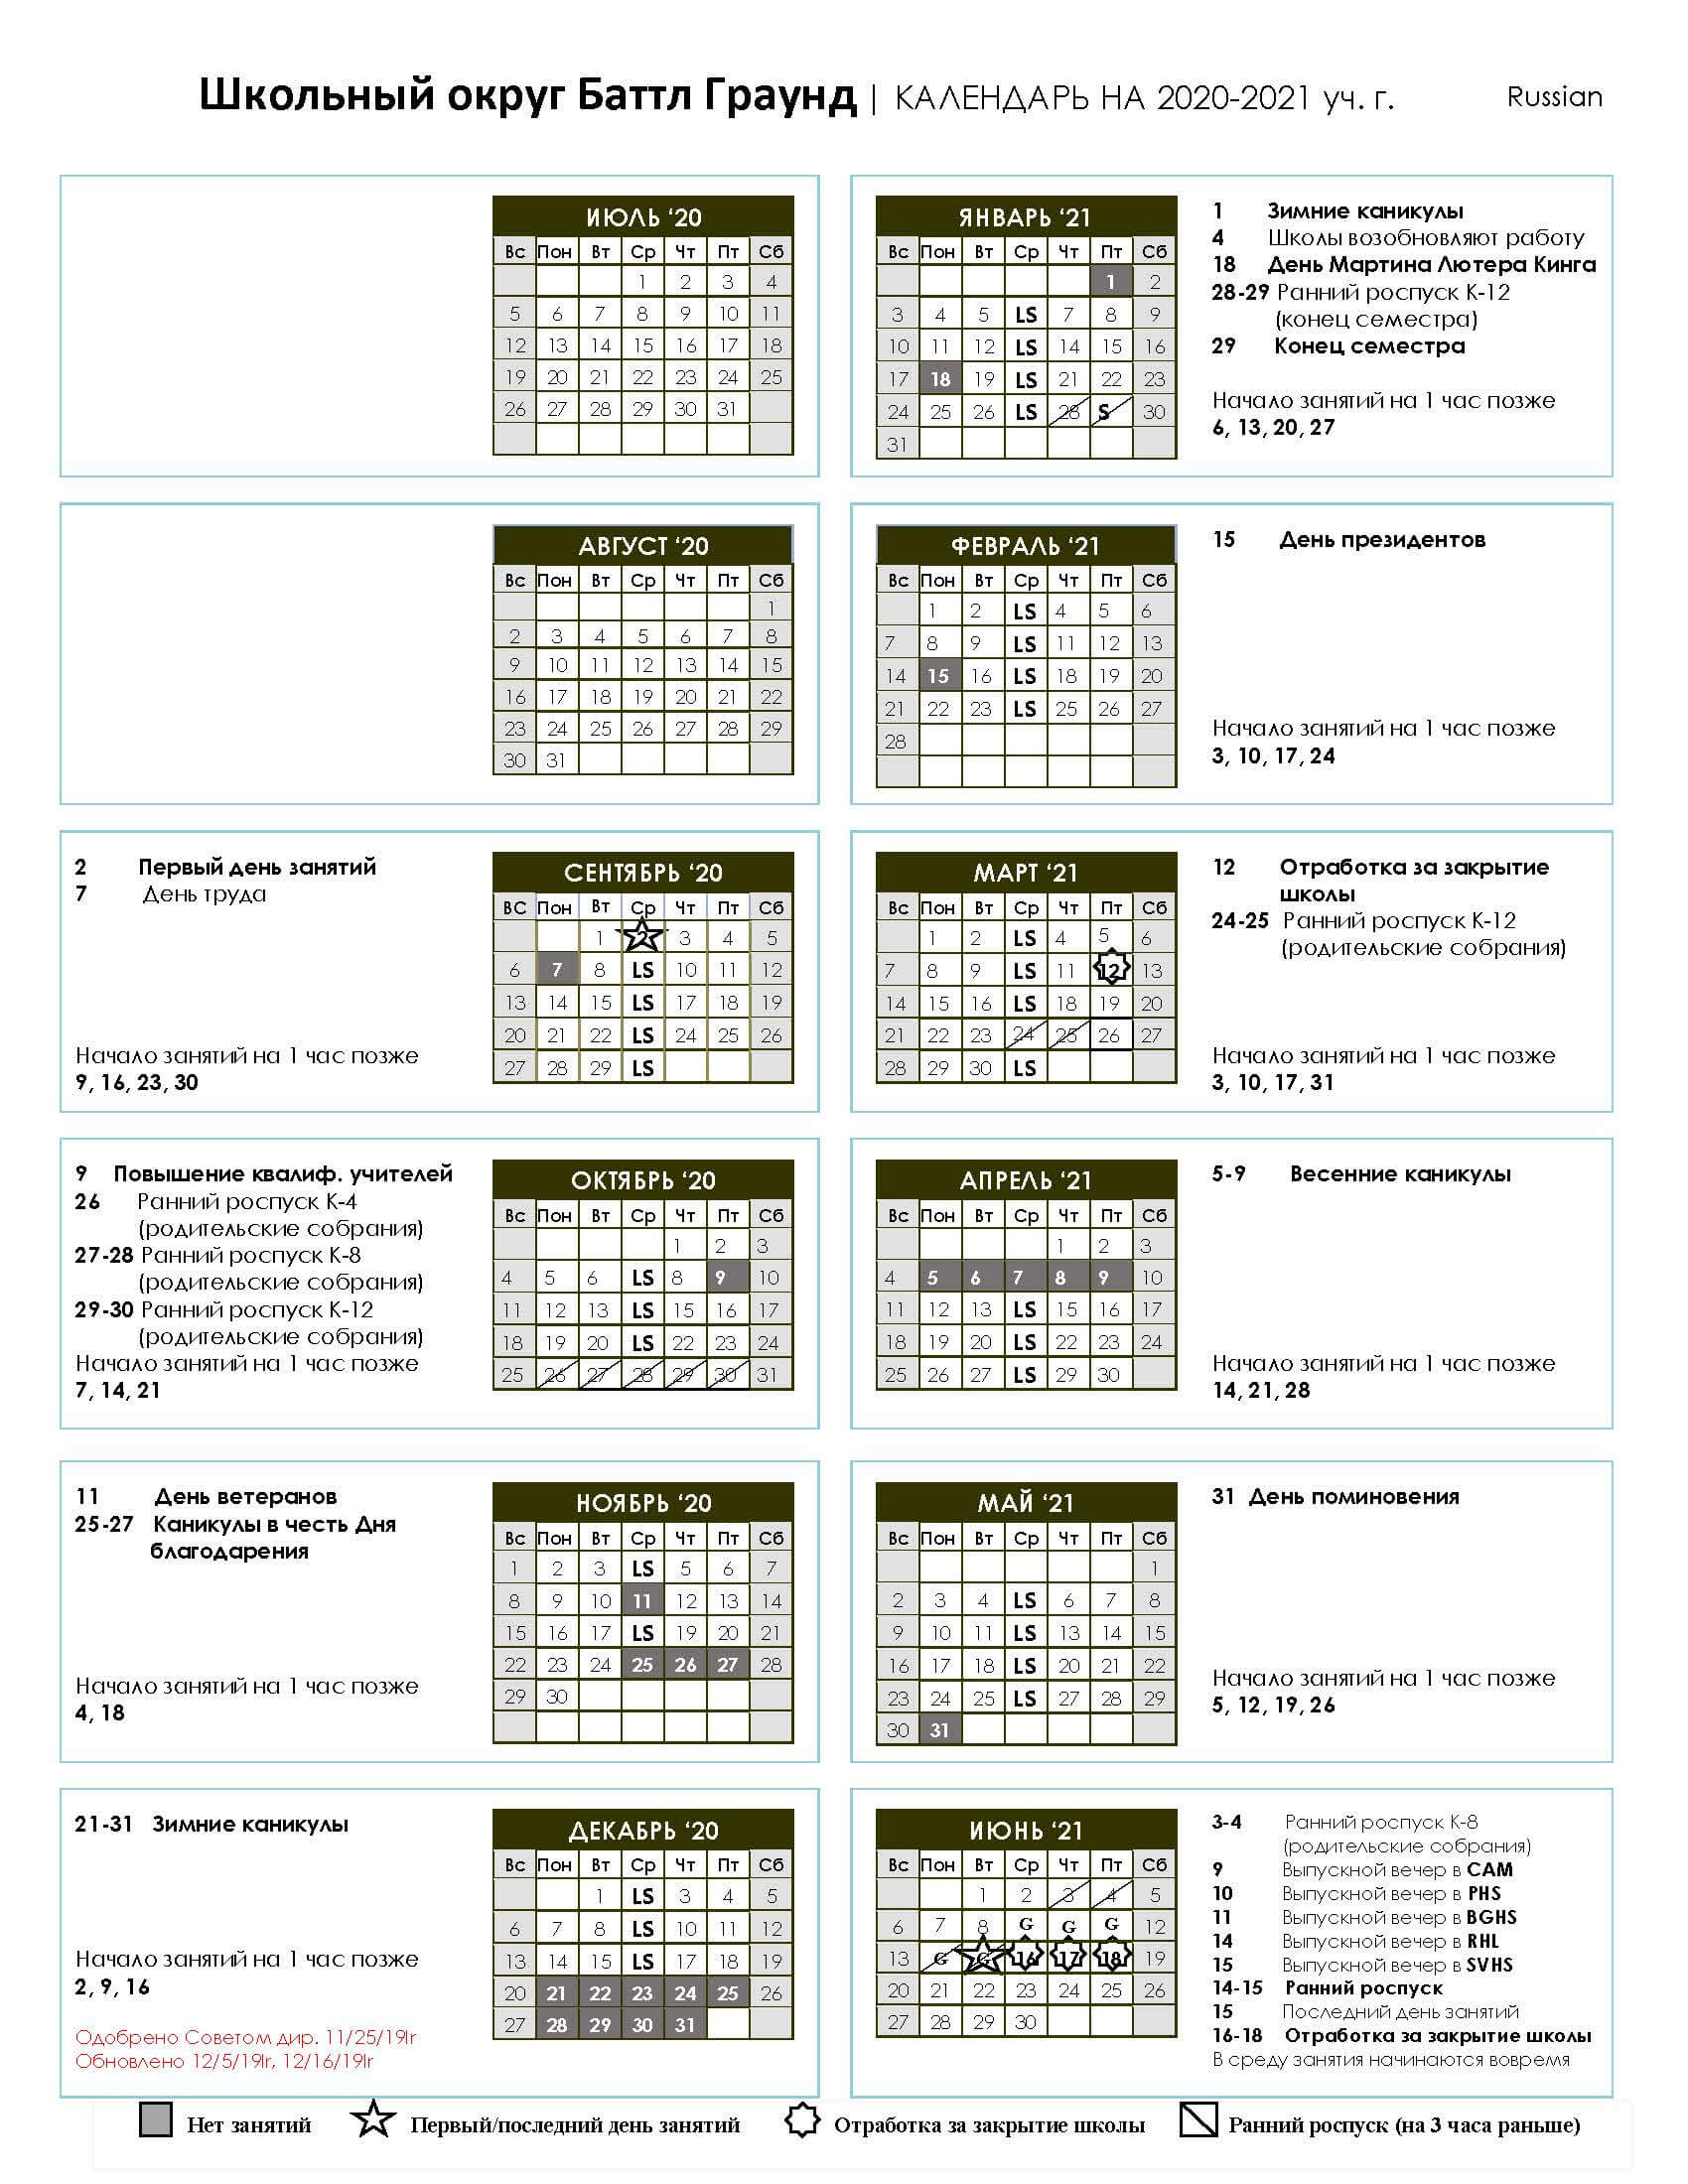 2025-2026-rainbow-school-year-calendar-by-janz-zazzle